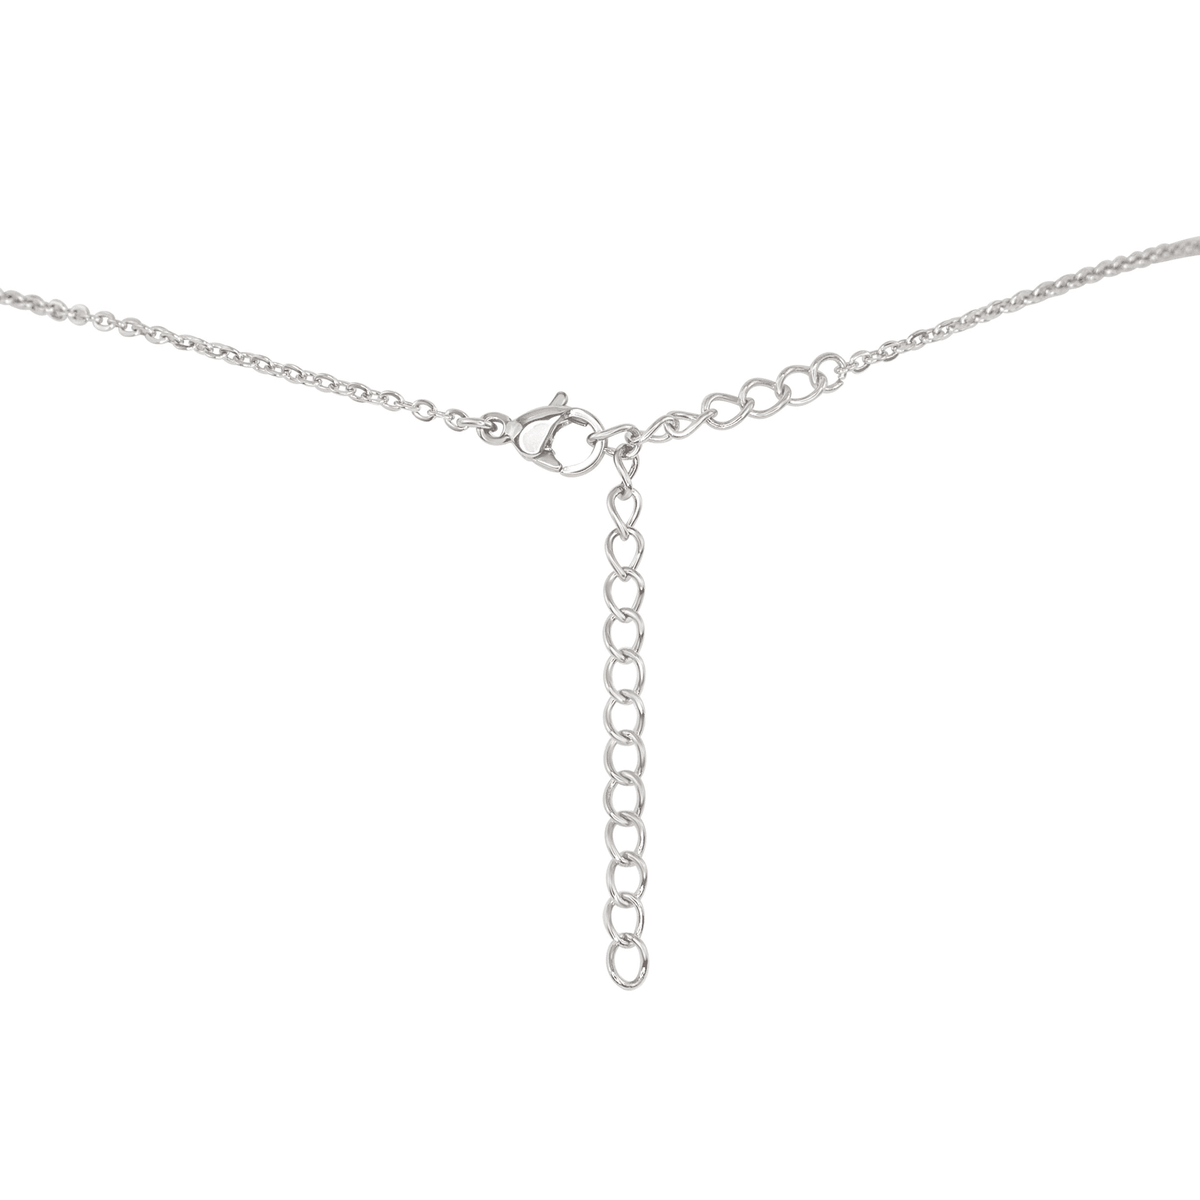 Aquamarine Beaded Chain Choker Necklace - Aquamarine Beaded Chain Choker Necklace - Sterling Silver - Luna Tide Handmade Crystal Jewellery